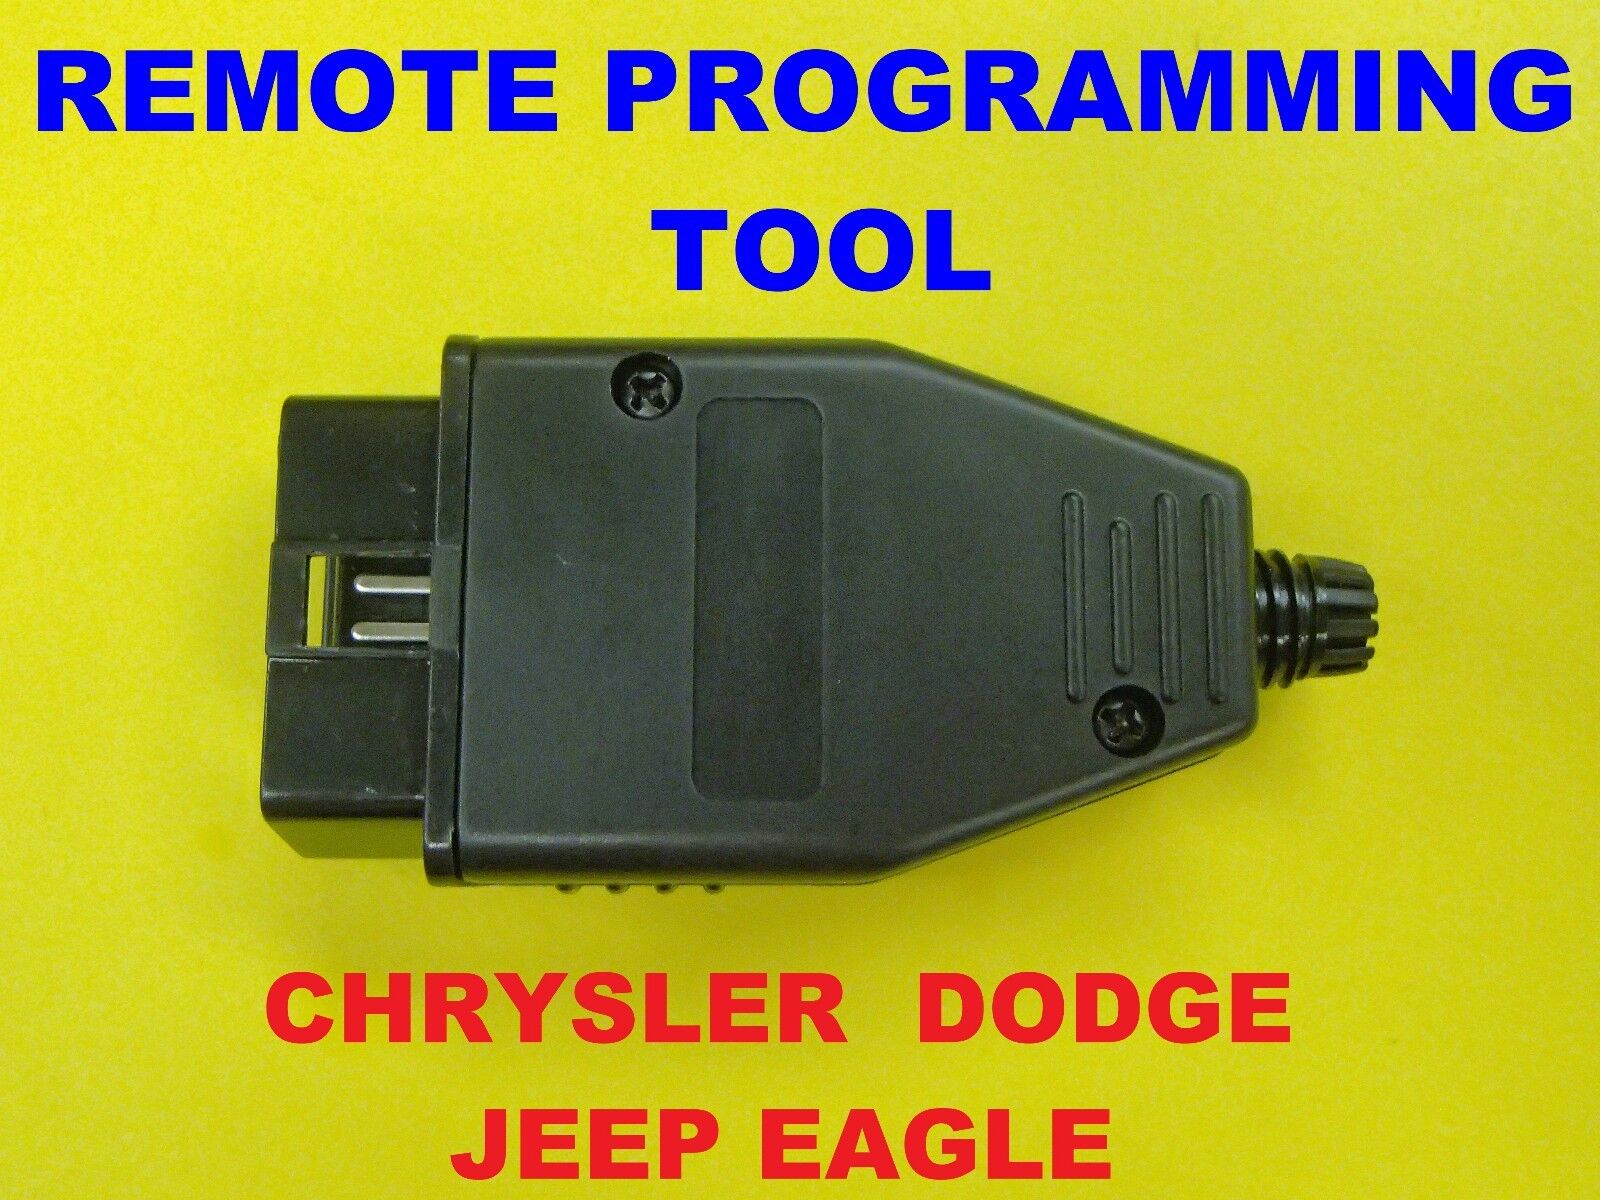 Mitsubishi Chrysler Dodge Eagle Remote Programmer Program Tool Easy Instruction 